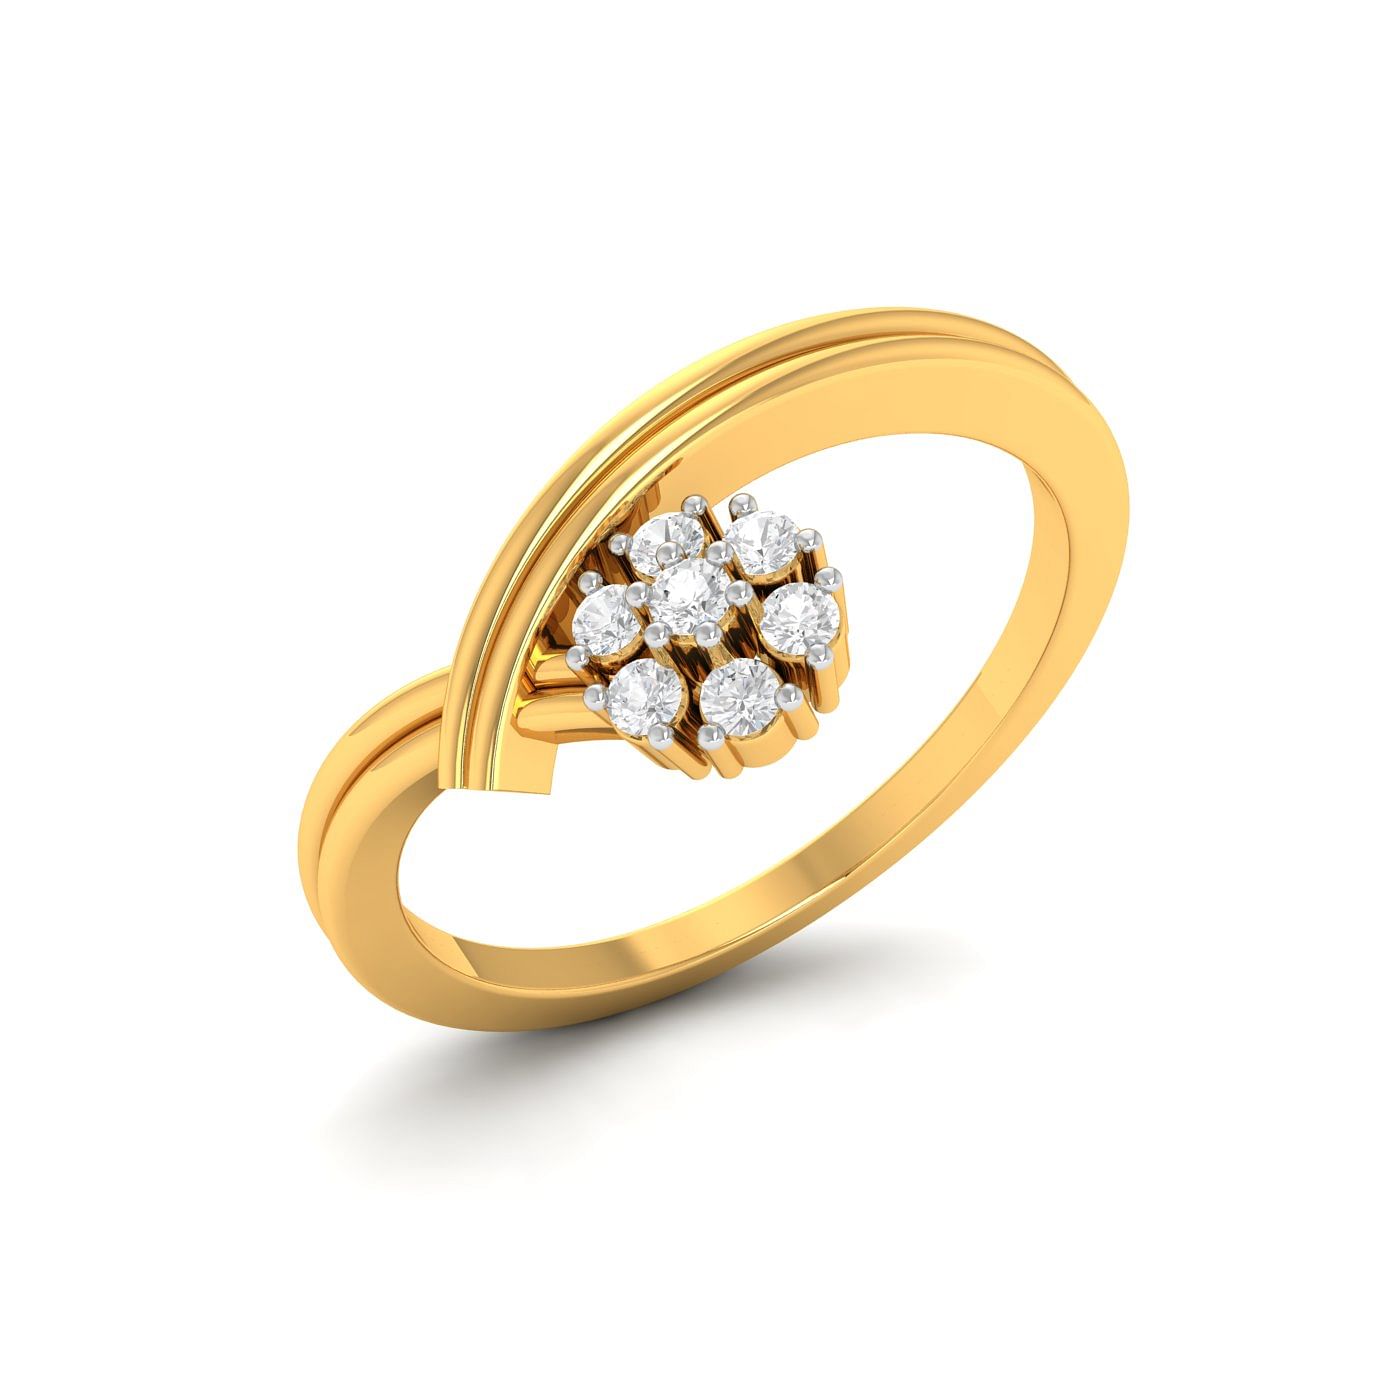 Designer 14k Yellow Gold Claire 4 Stone Diamond Ring